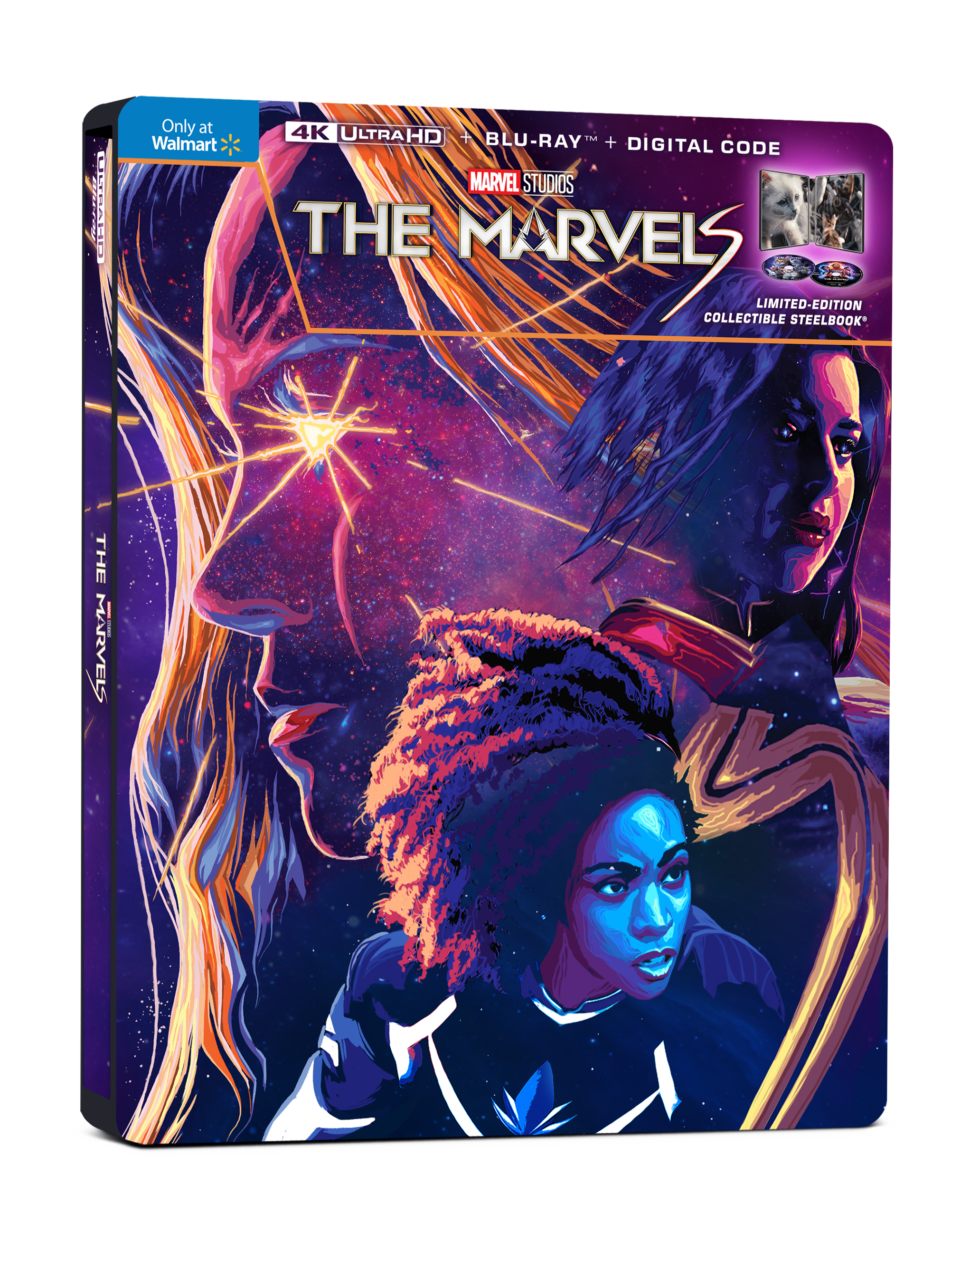 The Marvels 4K Ultra HD Combo Pack cover (Marvel Studios/Walt Disney Studios Home Entertainment)